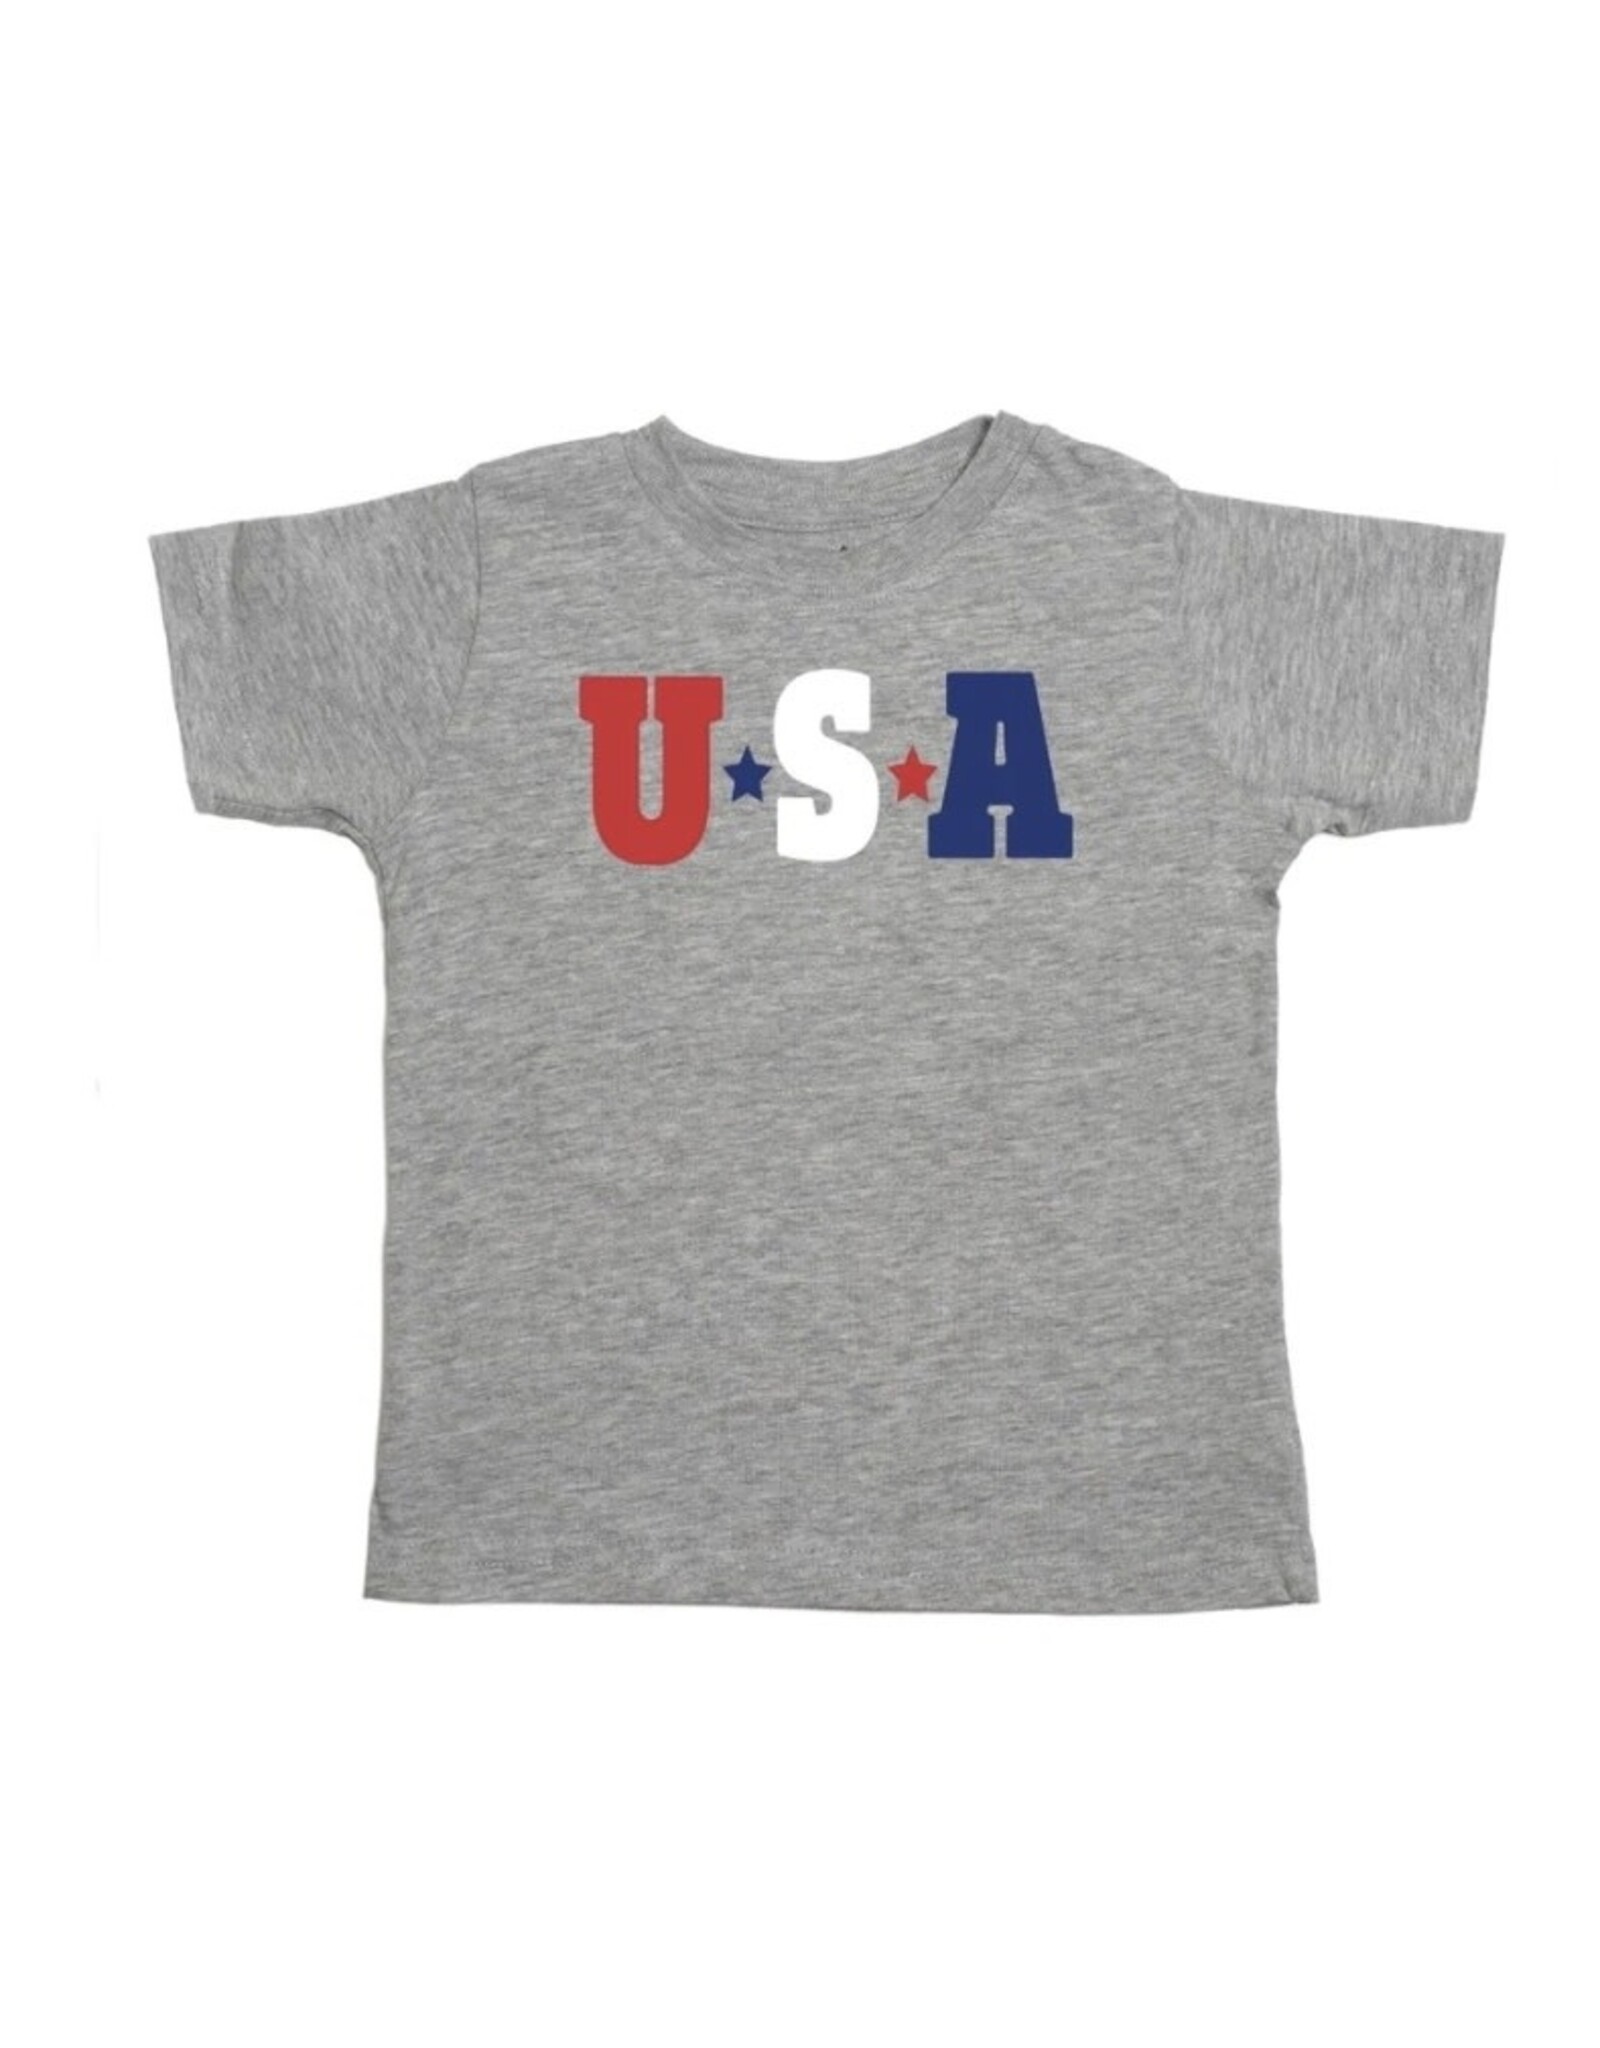 Sweet Wink- USA S/S Gray Shirt